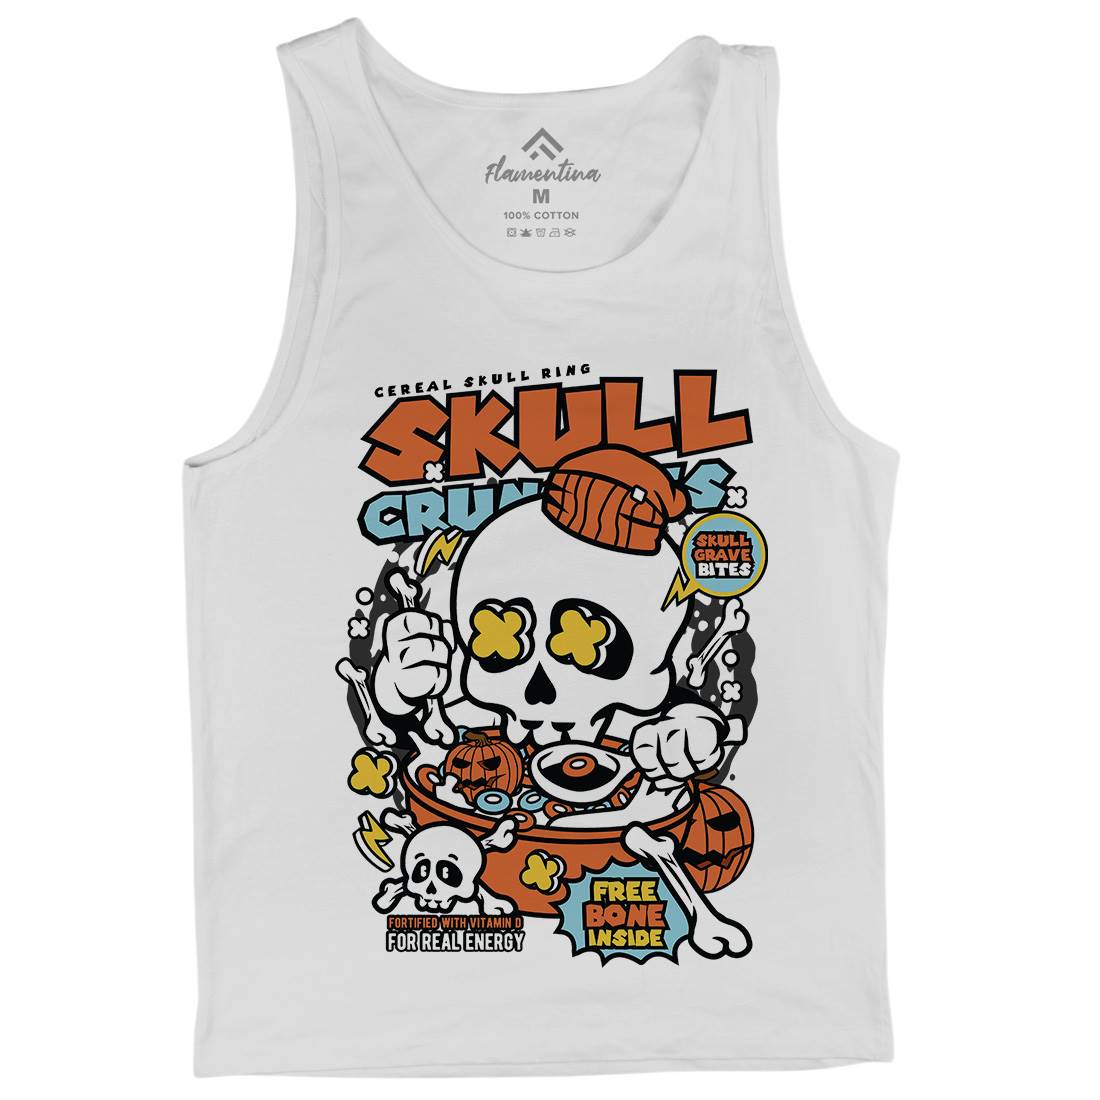 Skull Crunchies Mens Tank Top Vest Food C656